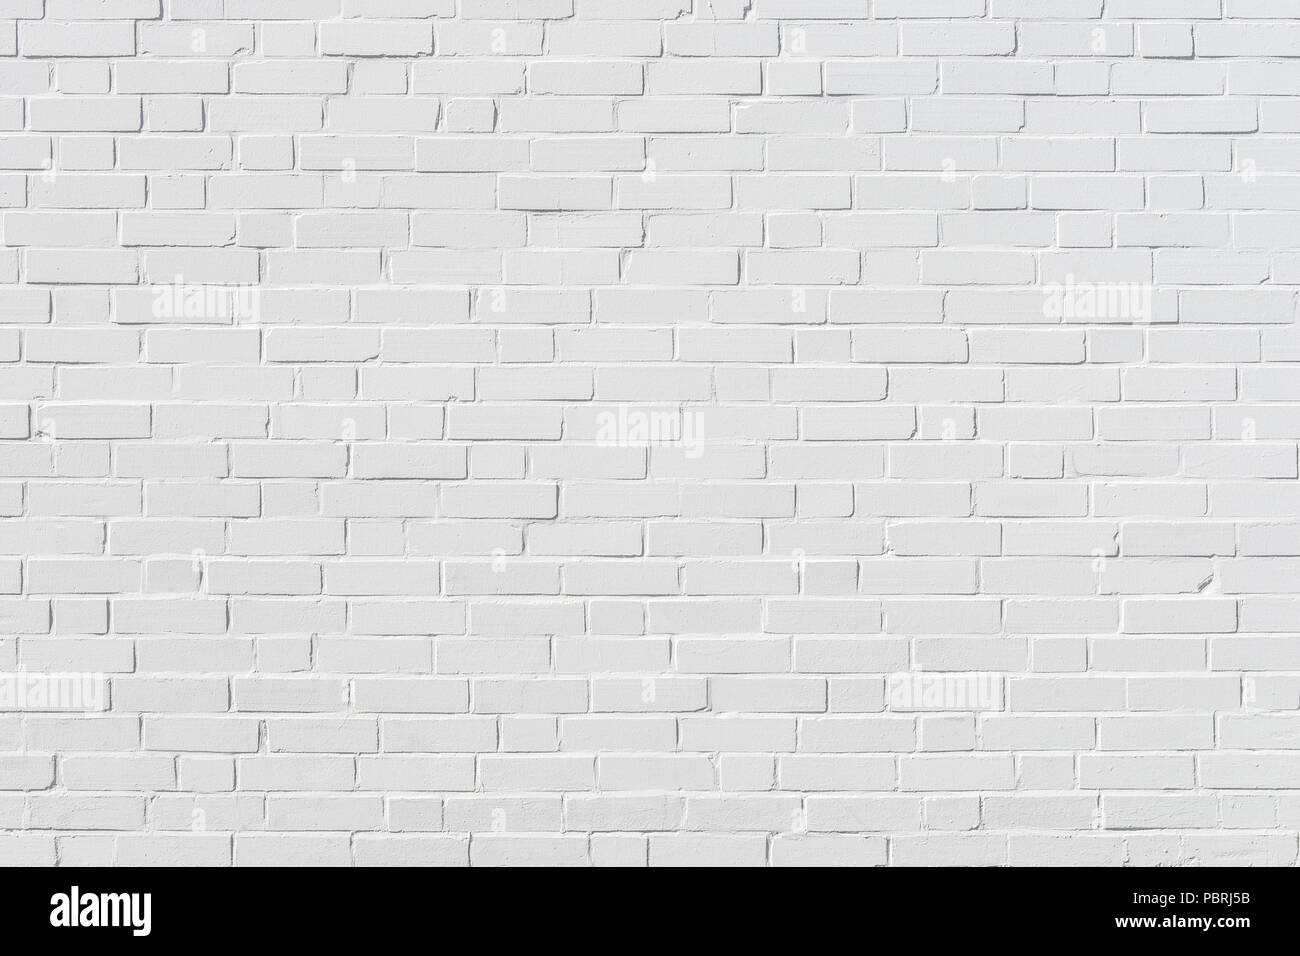 Brick-built wall of white painted bricks, background image Stock Photo